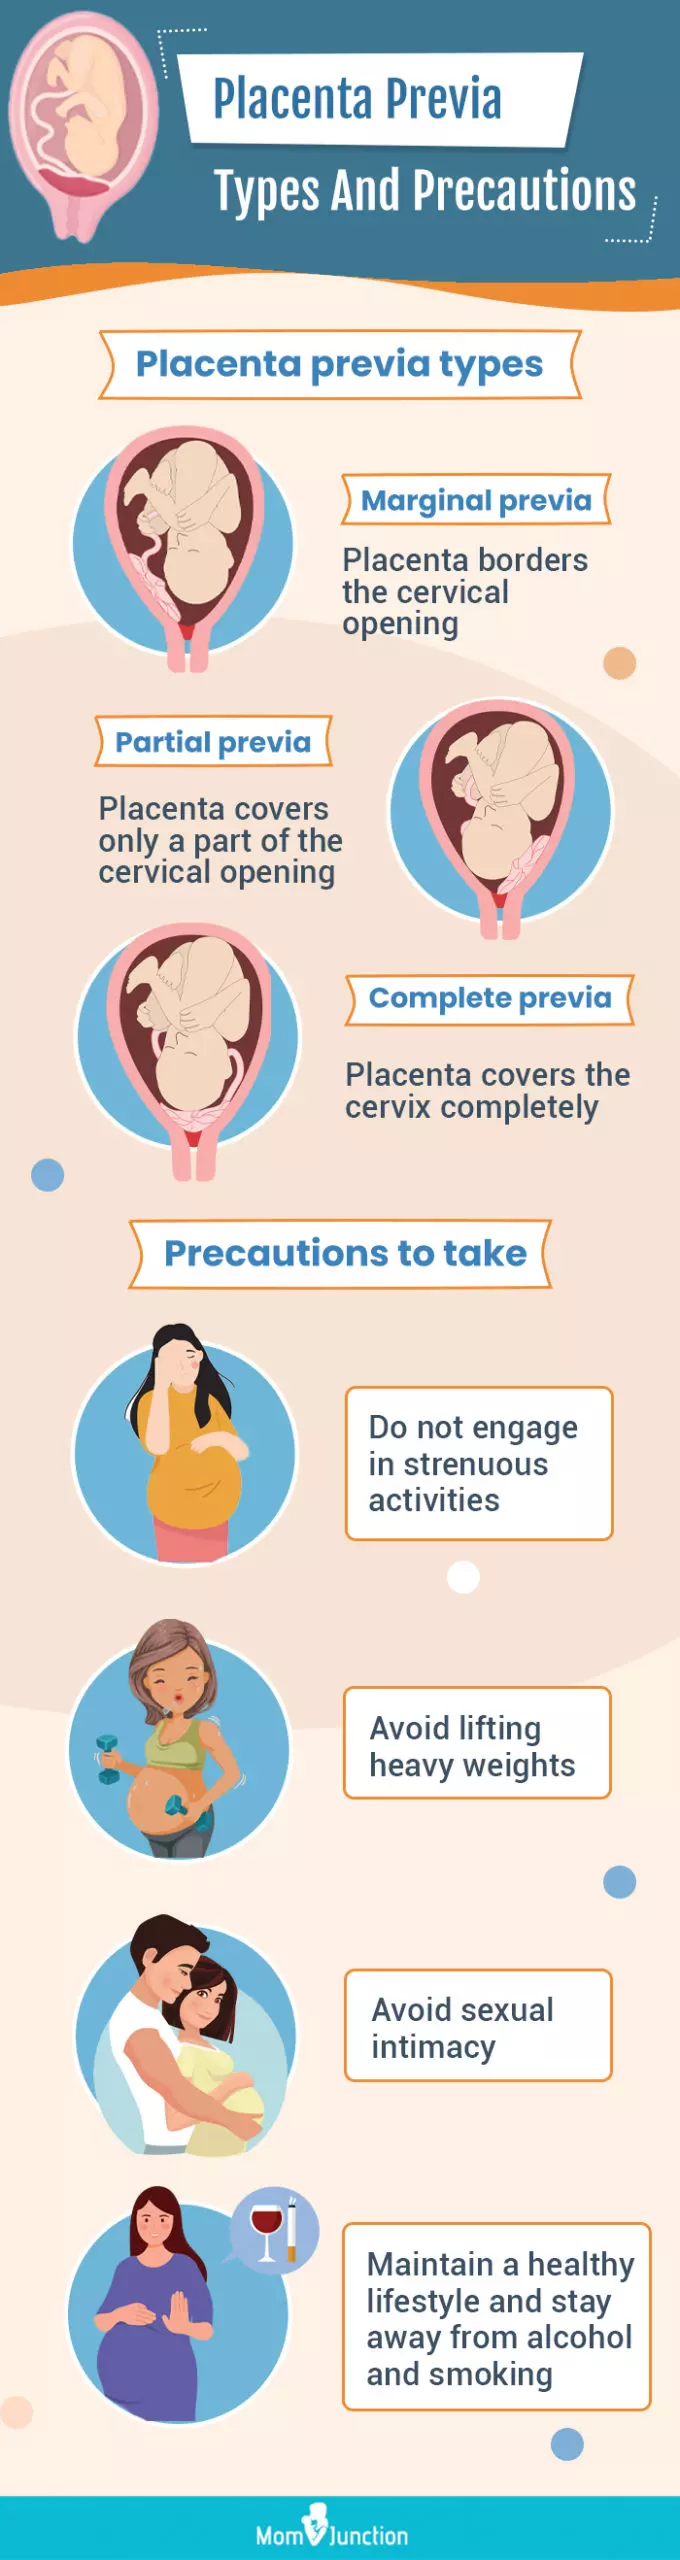 placenta previa types and precautions (infographic)